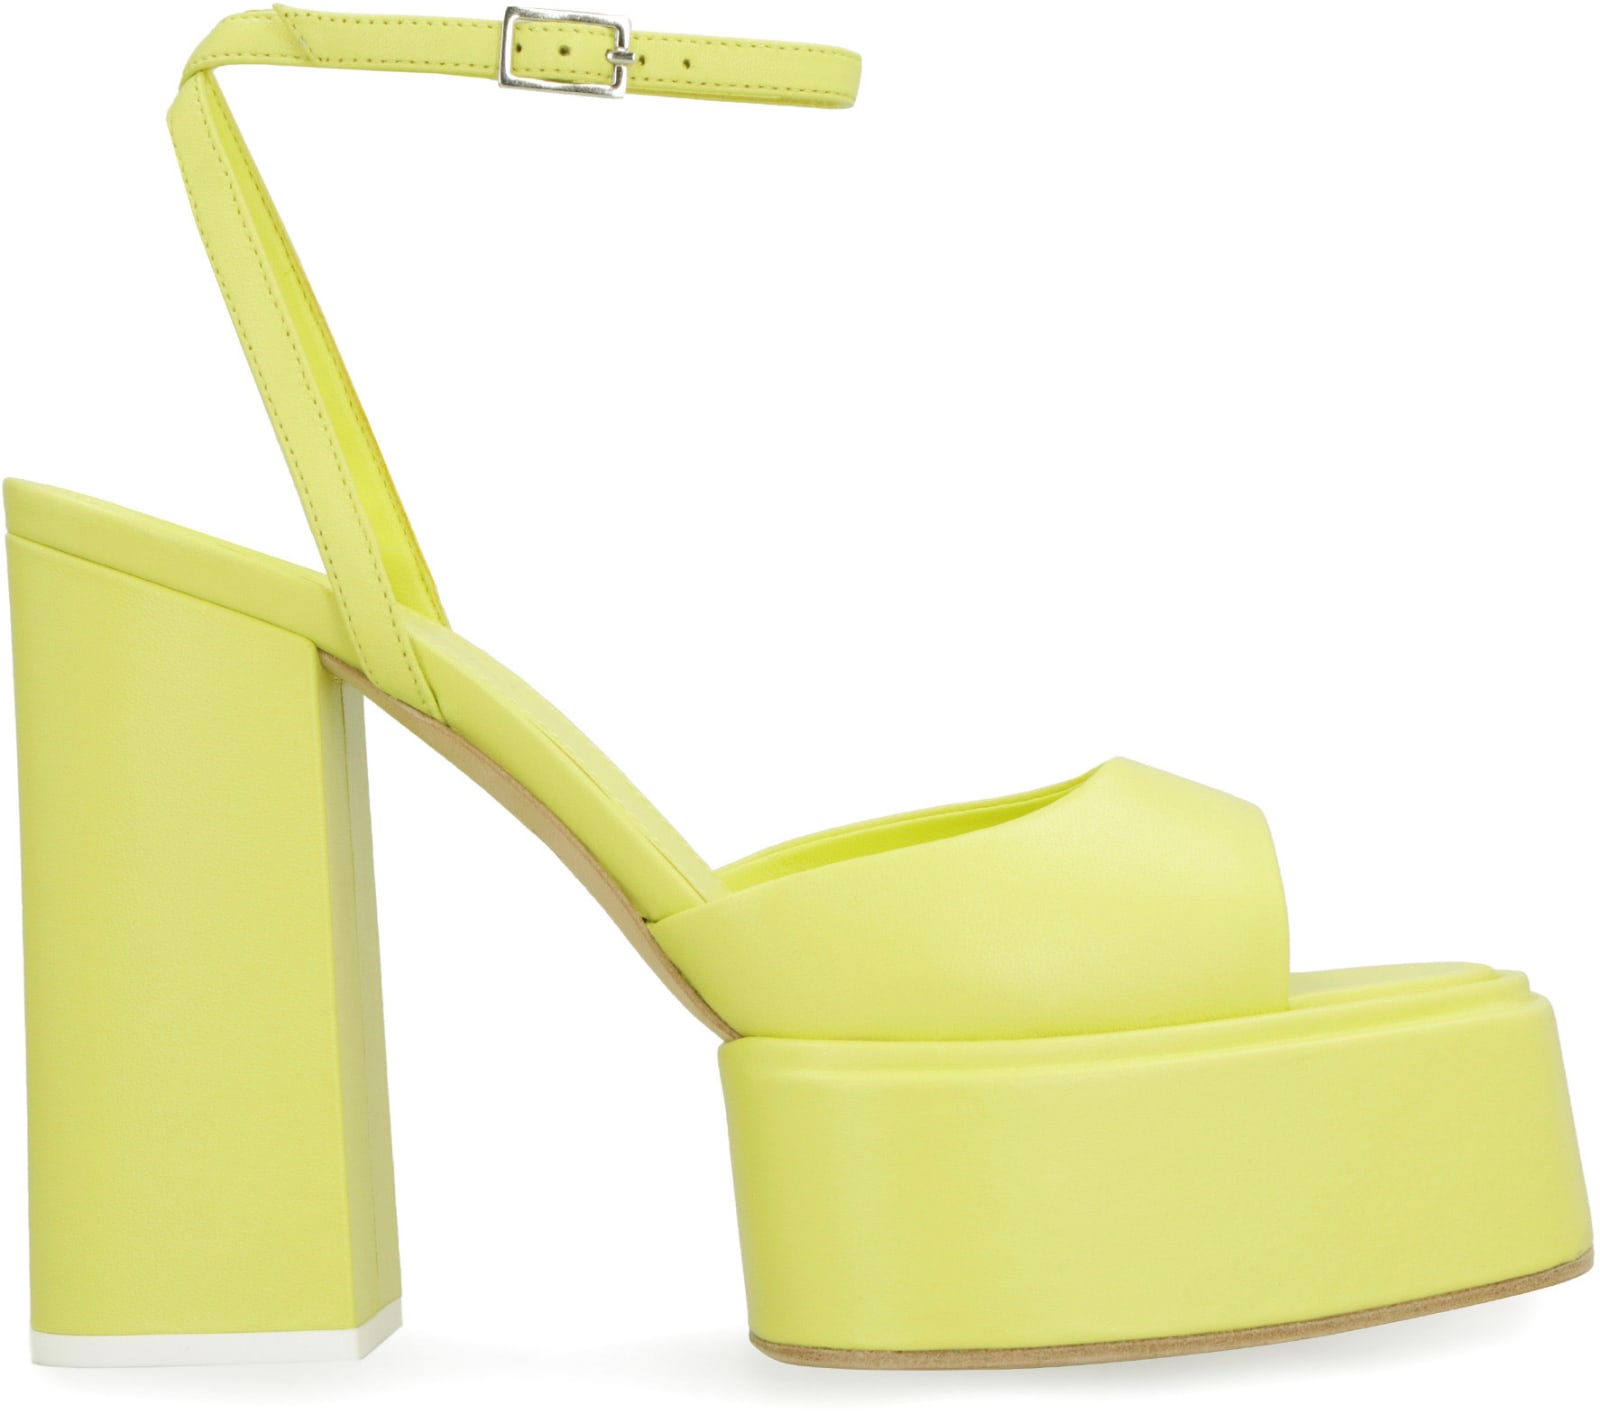 Shop 3juin Beth Heeled Sandals In Yellow